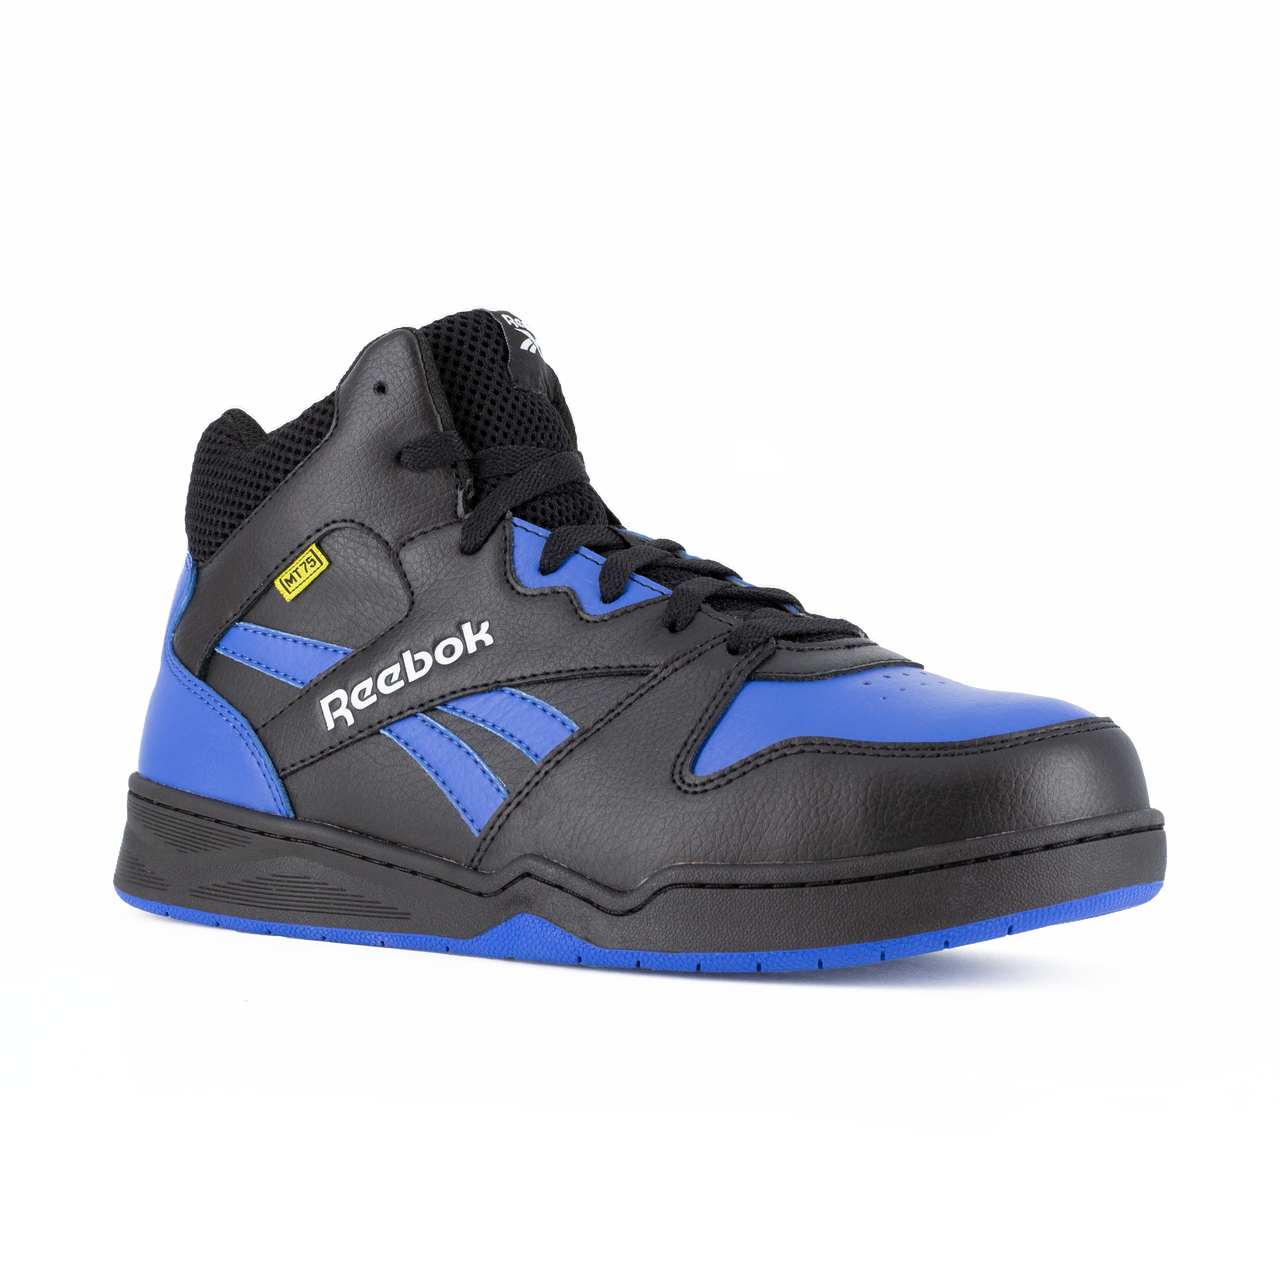 Reebok Men's BB4500 High Top Sneaker